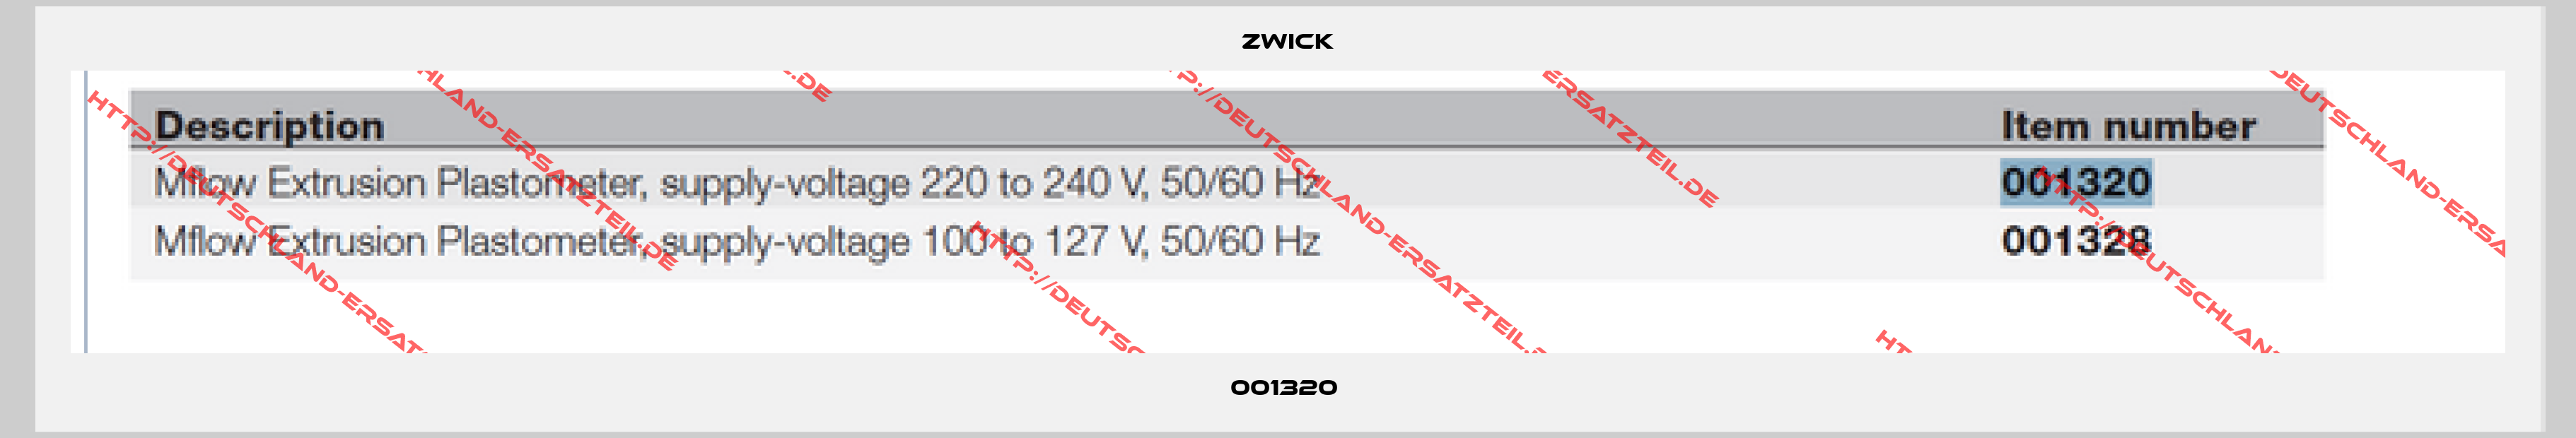 Zwick-001320 